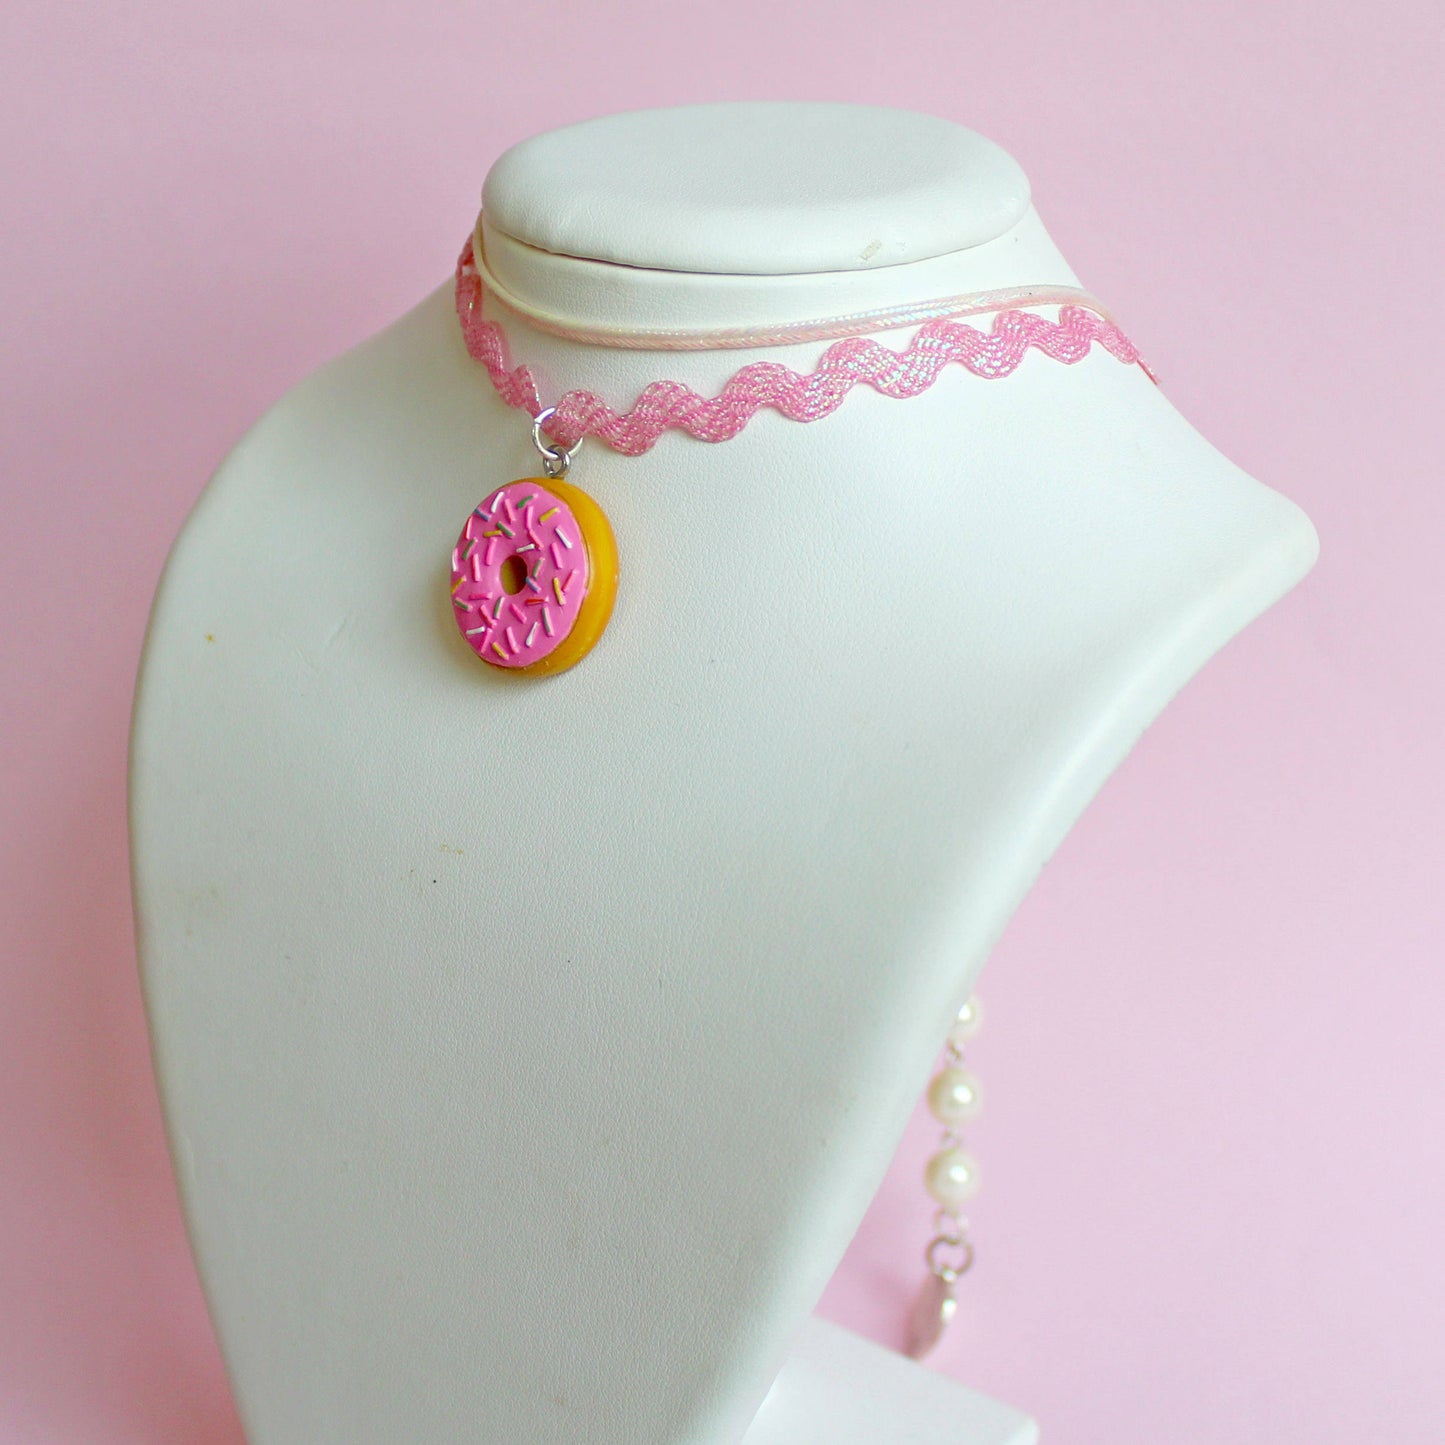 Pink Donut Layered Choker Necklace